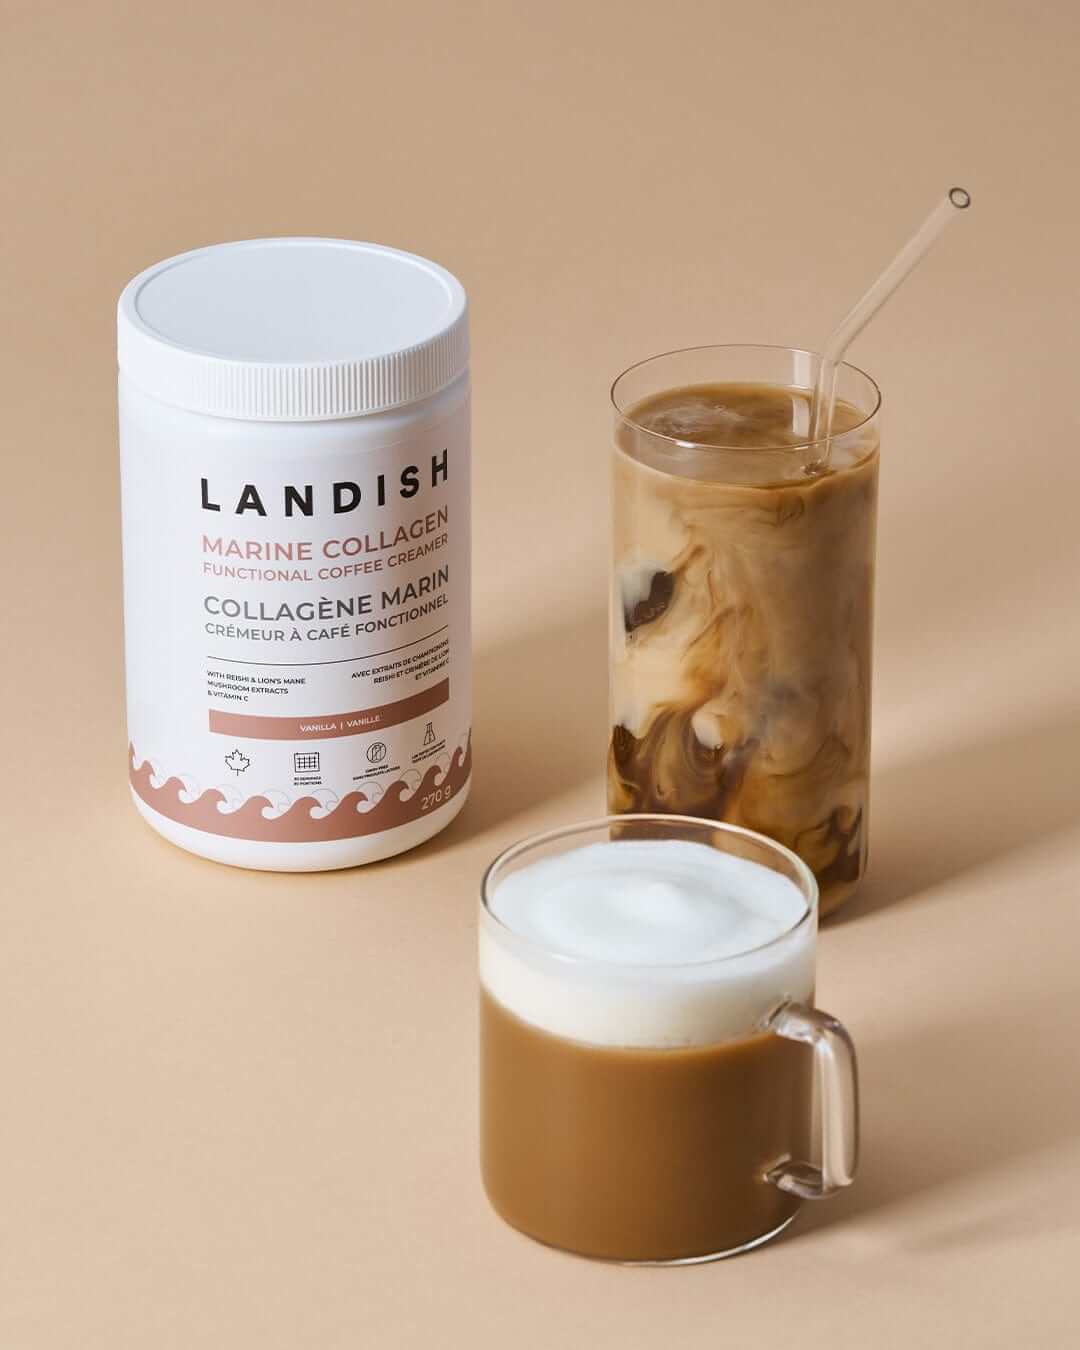 Landish Teas Landish Marine Collagen Functional Coffee Creamer